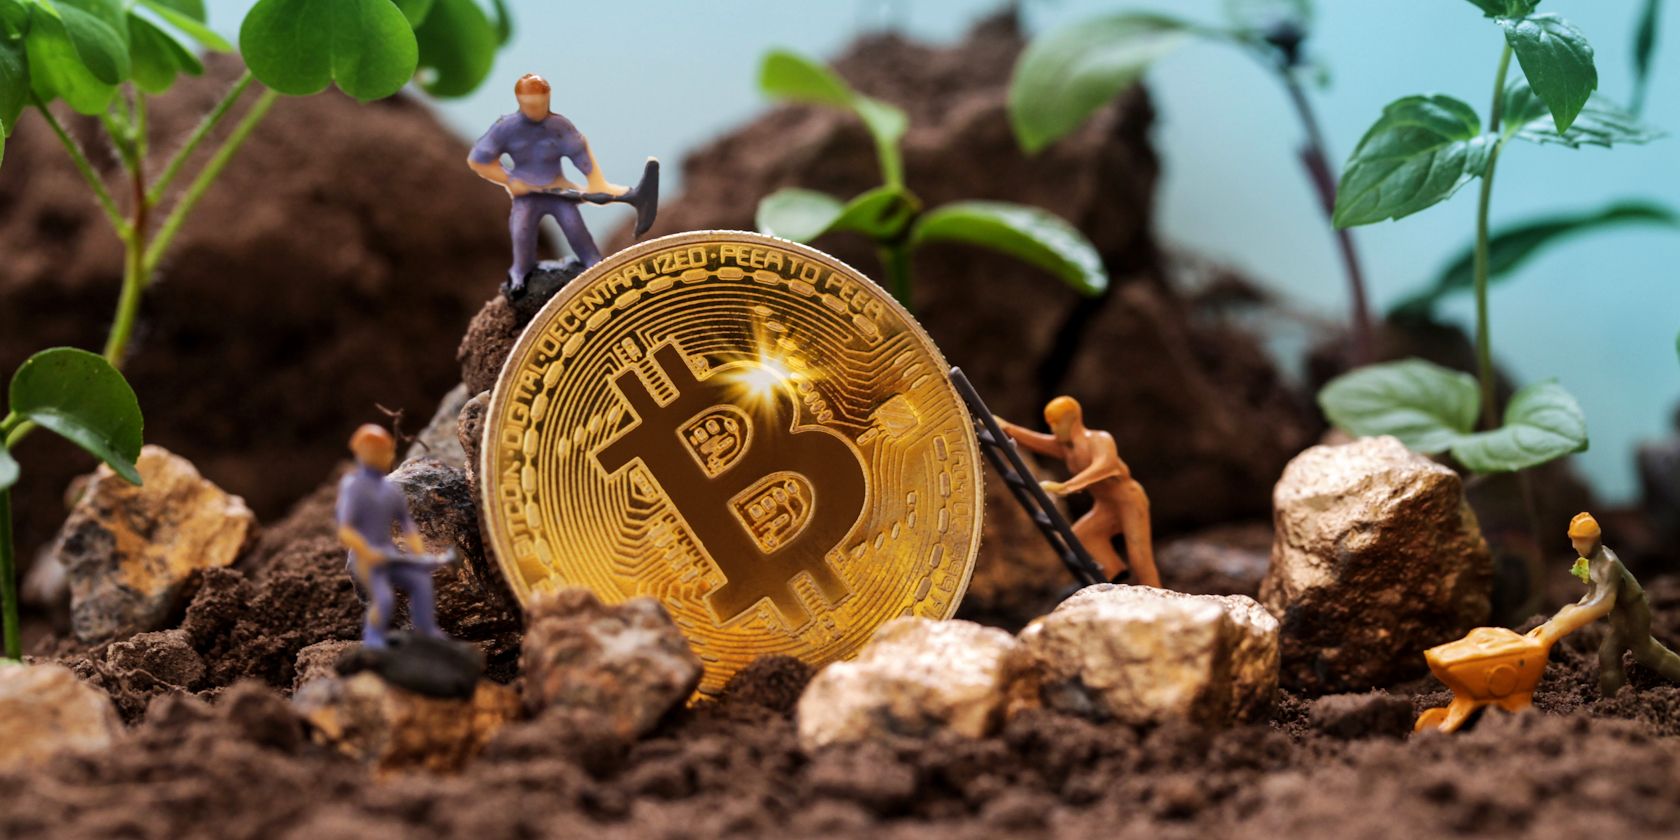 small figures mining a bitcoin in the garden